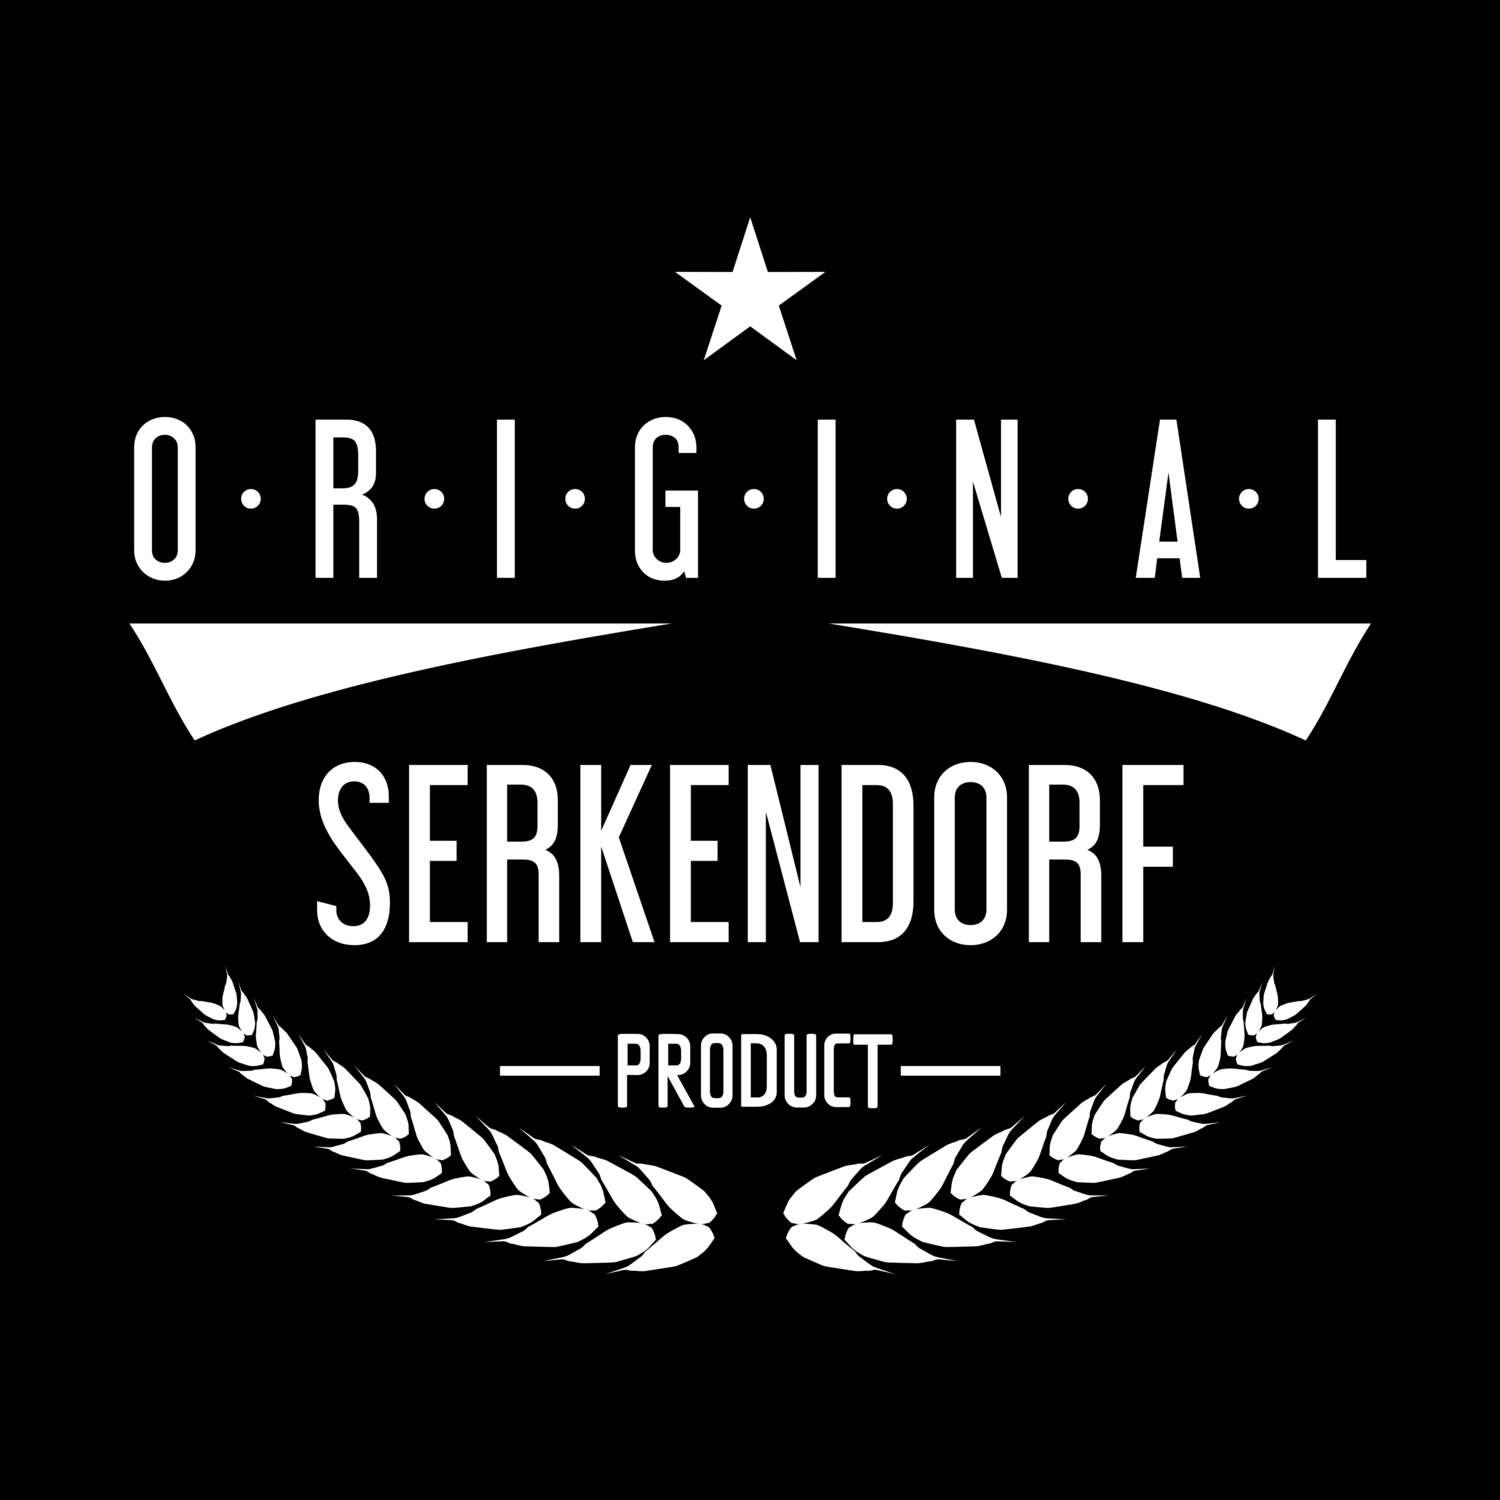 Serkendorf T-Shirt »Original Product«